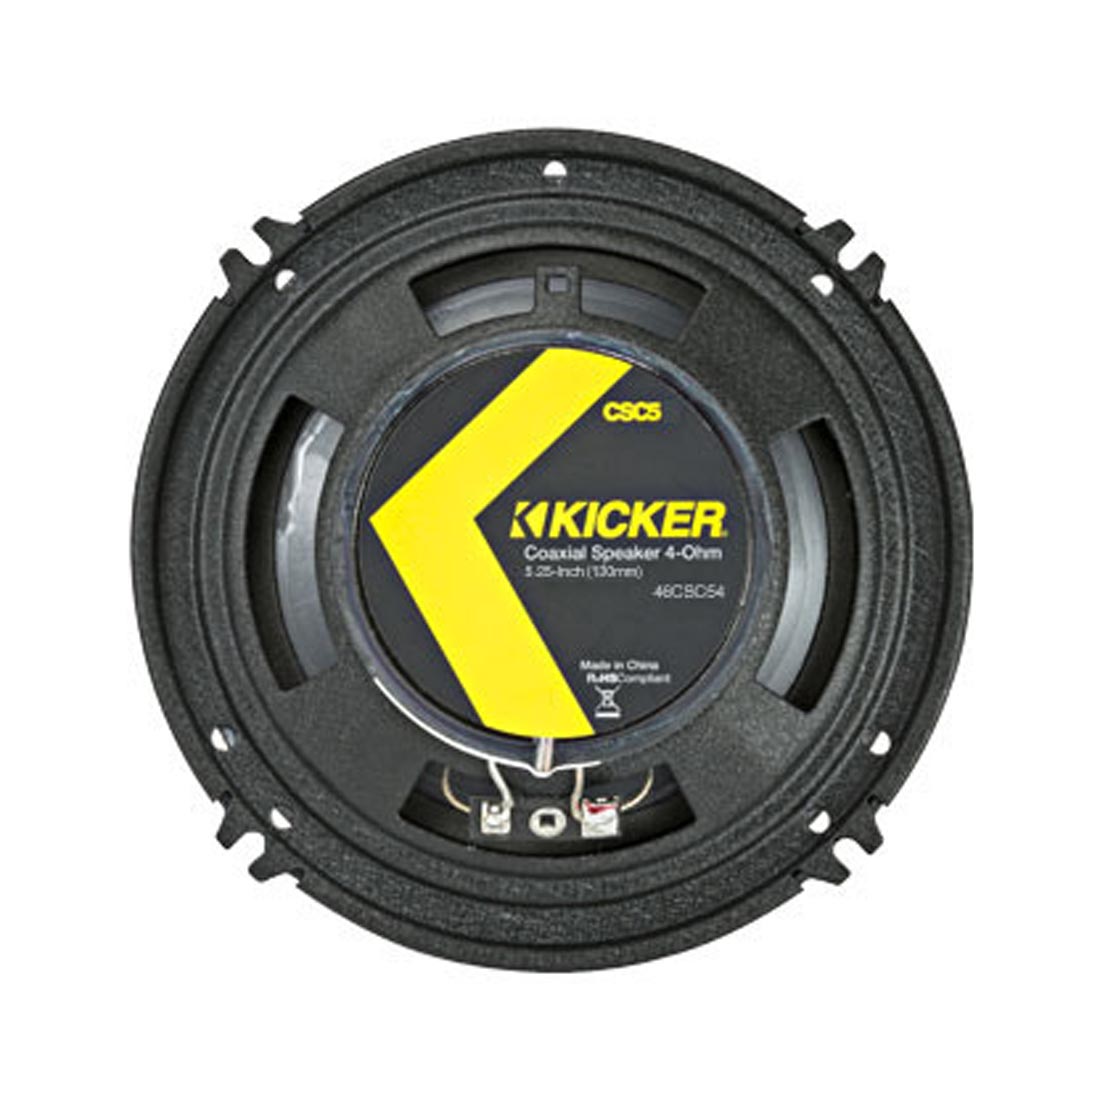 Kicker 46CSC54 CS Series 5.25″ 2-Way Coaxial Car Speakers